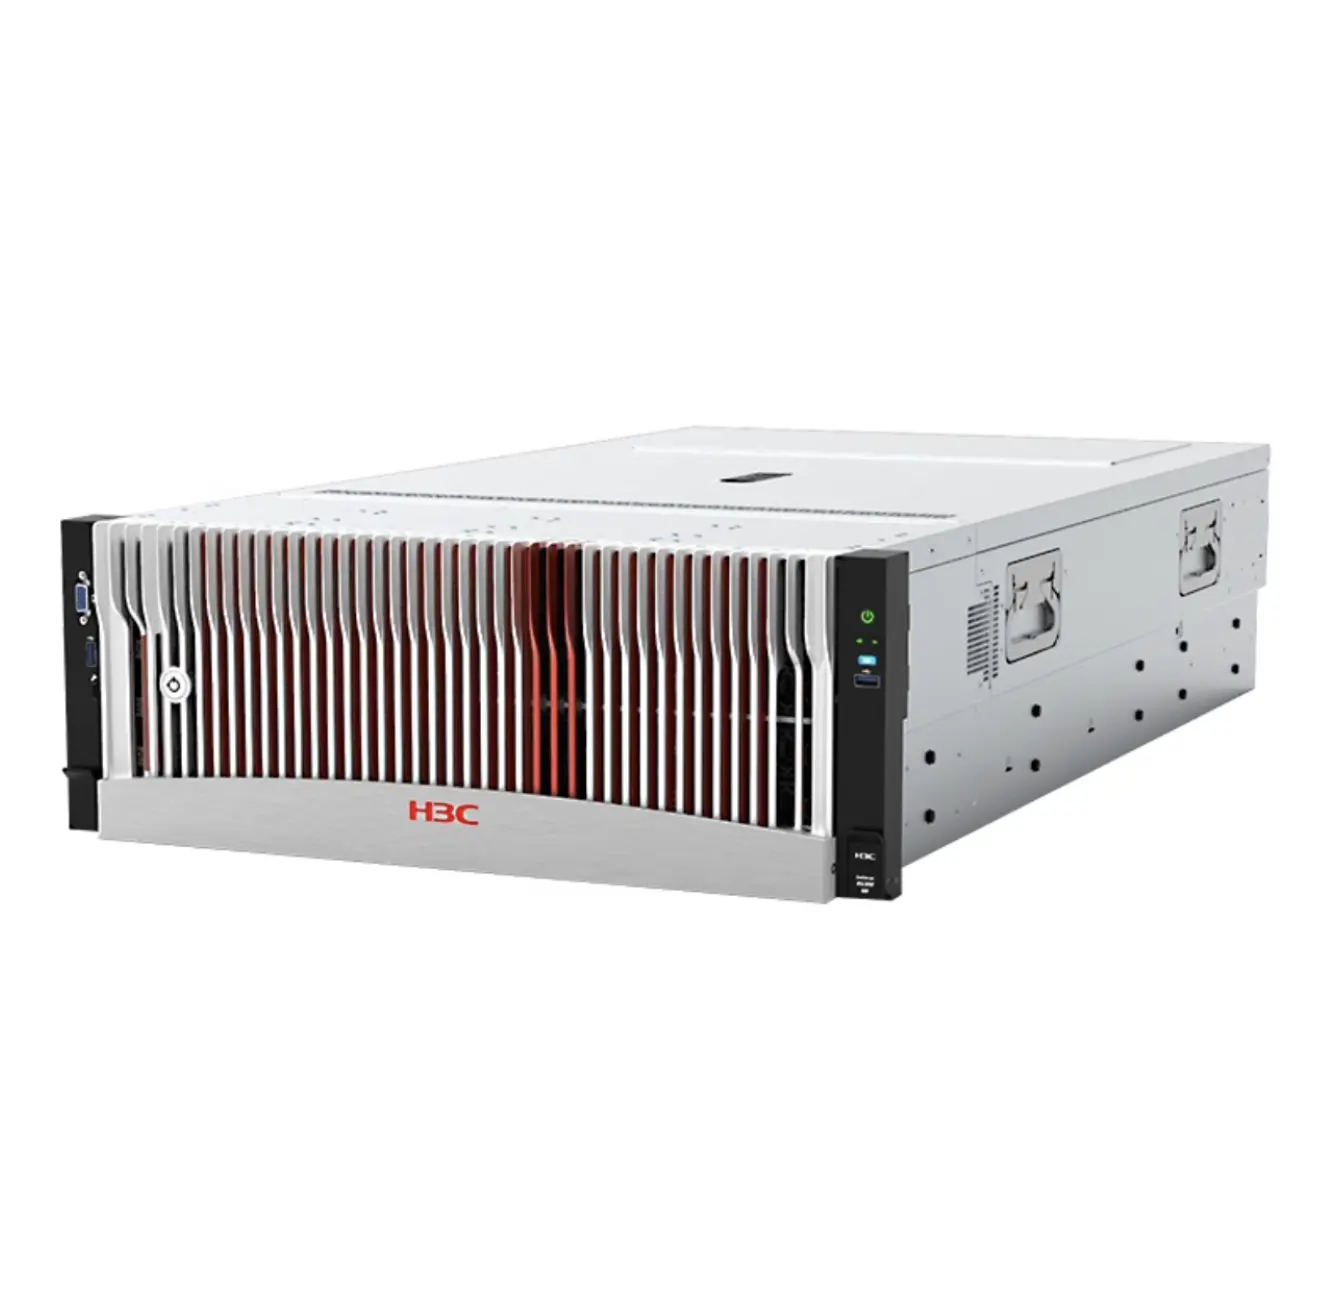 Terbaru H3C unierver R5300 G5 4U rak Server GPU Server R5300G5 WINDOW 2009 server